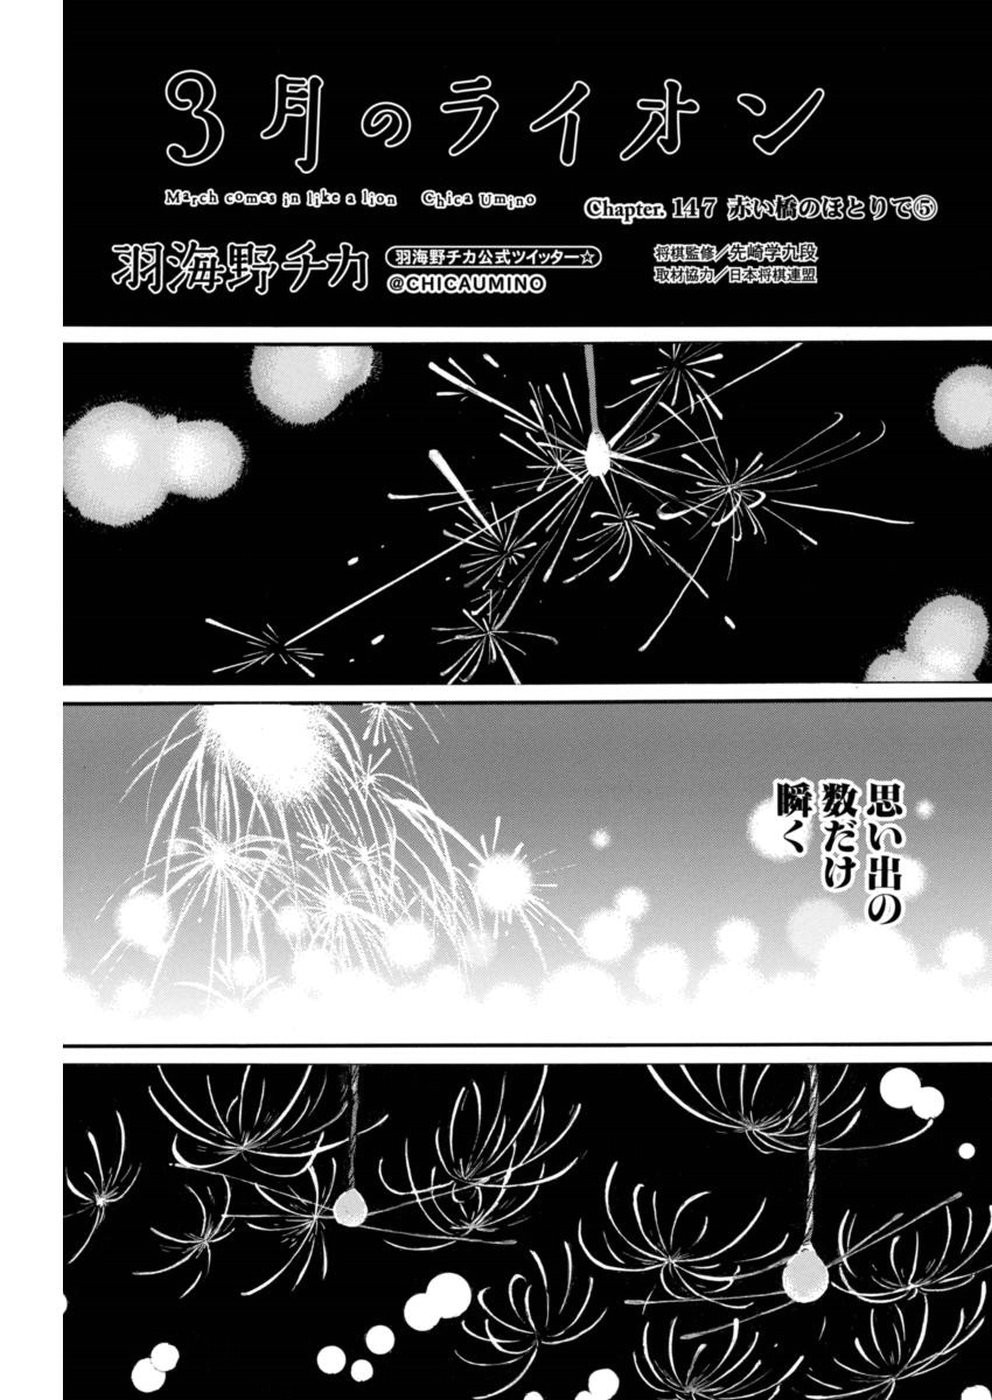 3 Gatsu no Lion - Chapter 147 - Page 1